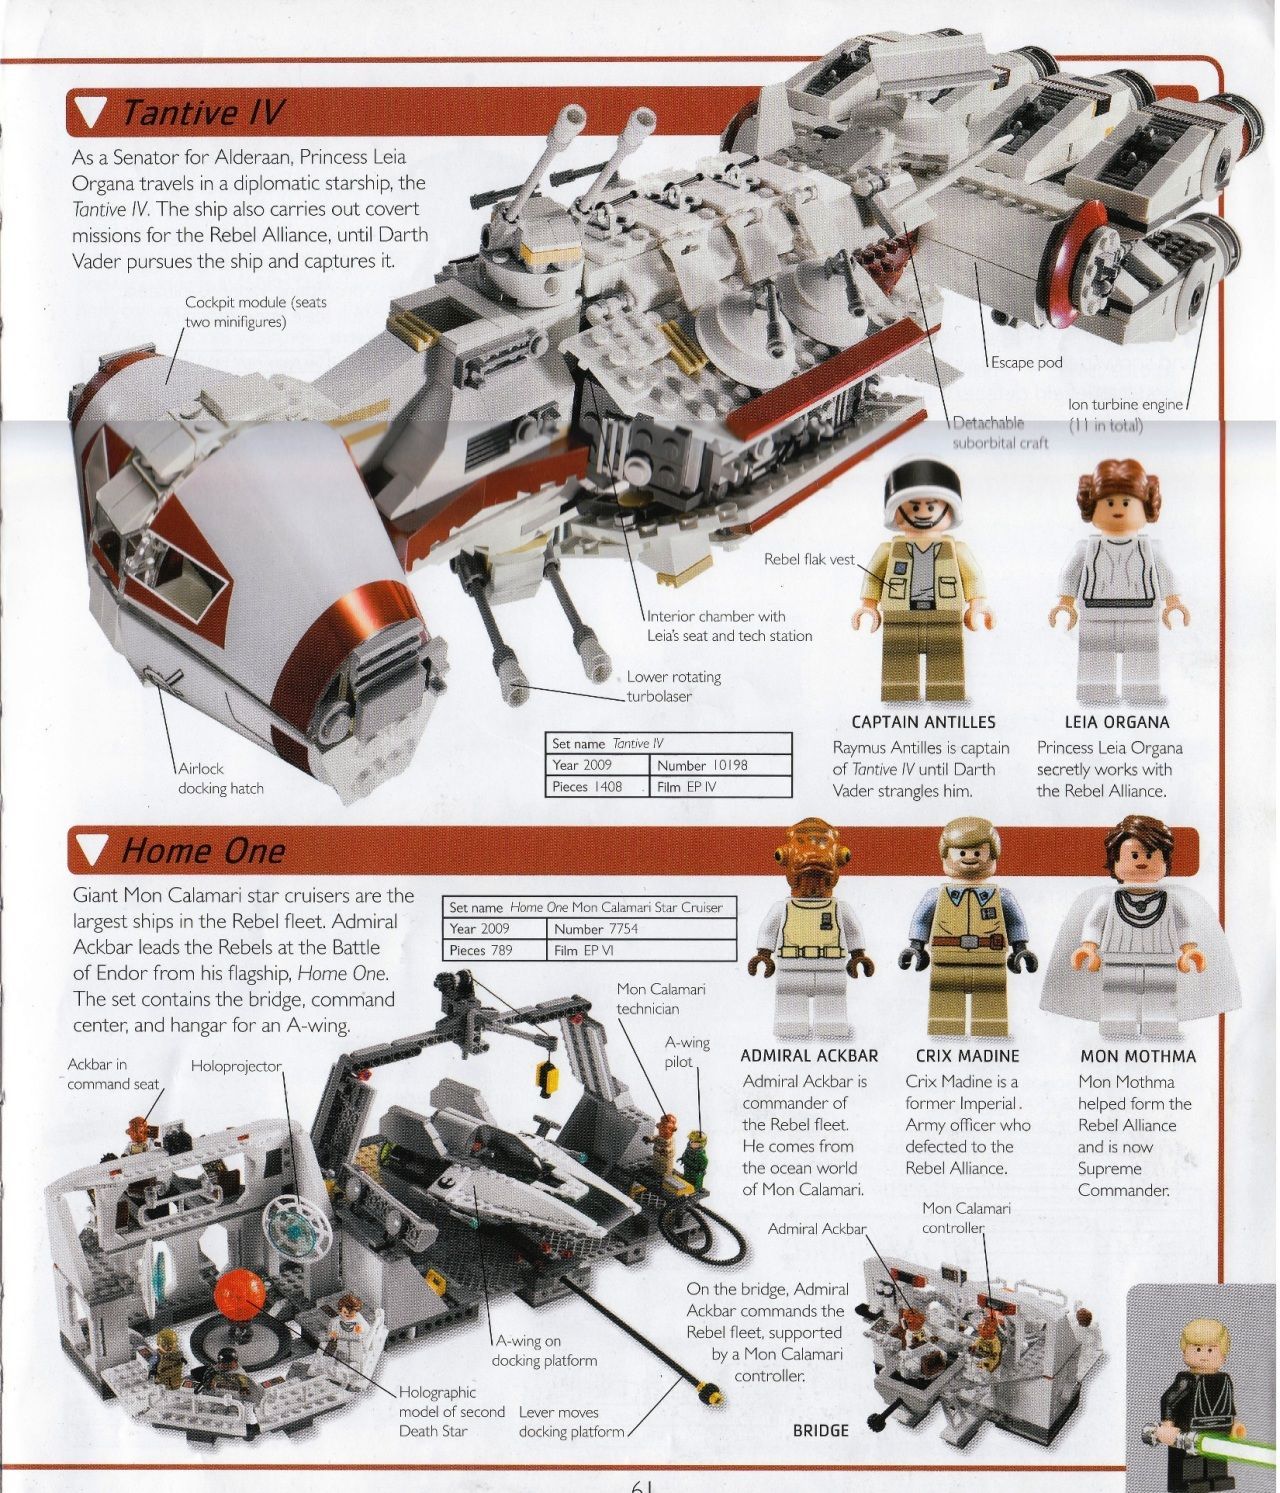 Lego Star Wars The Visual Dictionary 2009 Lego Star Wars The Visual Dictionary 2009 62